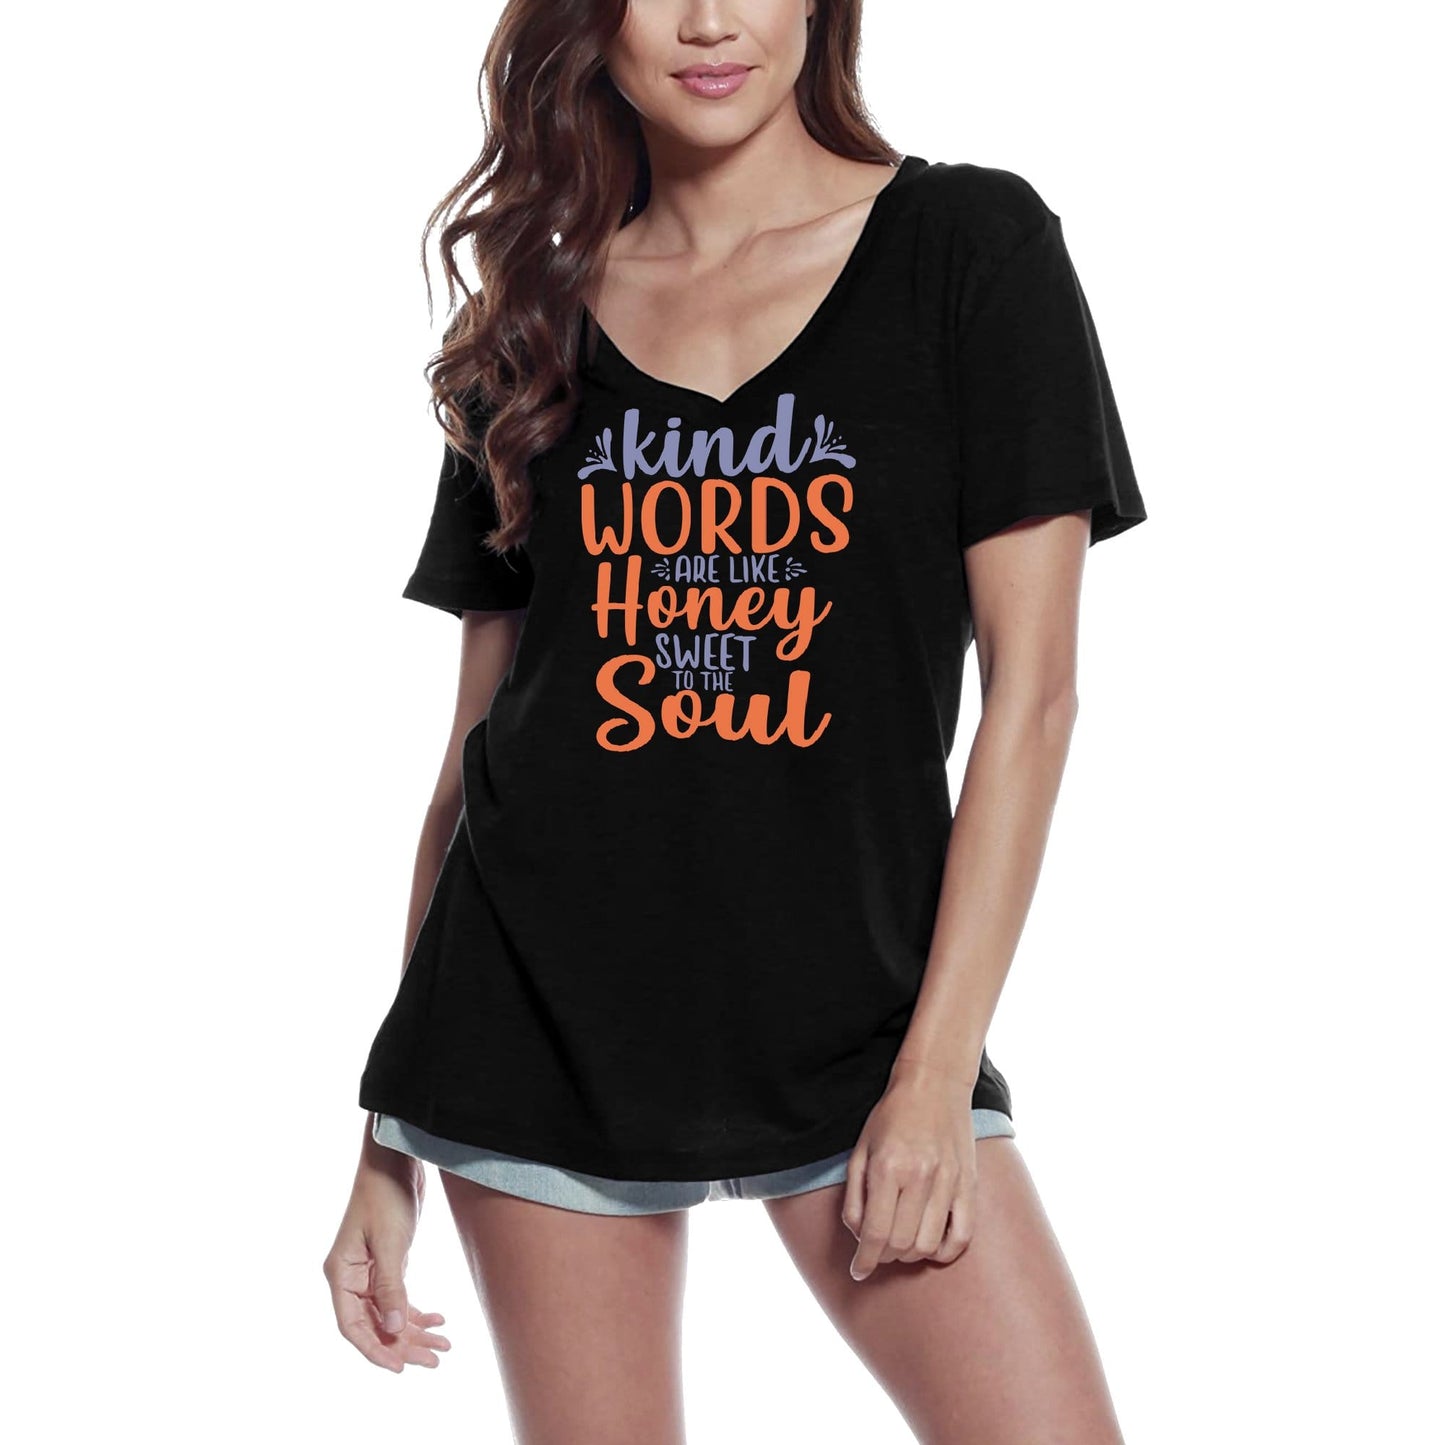 ULTRABASIC Women's T-Shirt Kind Words are Like Honey Sweet to the Soul - Short Sleeve Tee Shirt Gift Tops